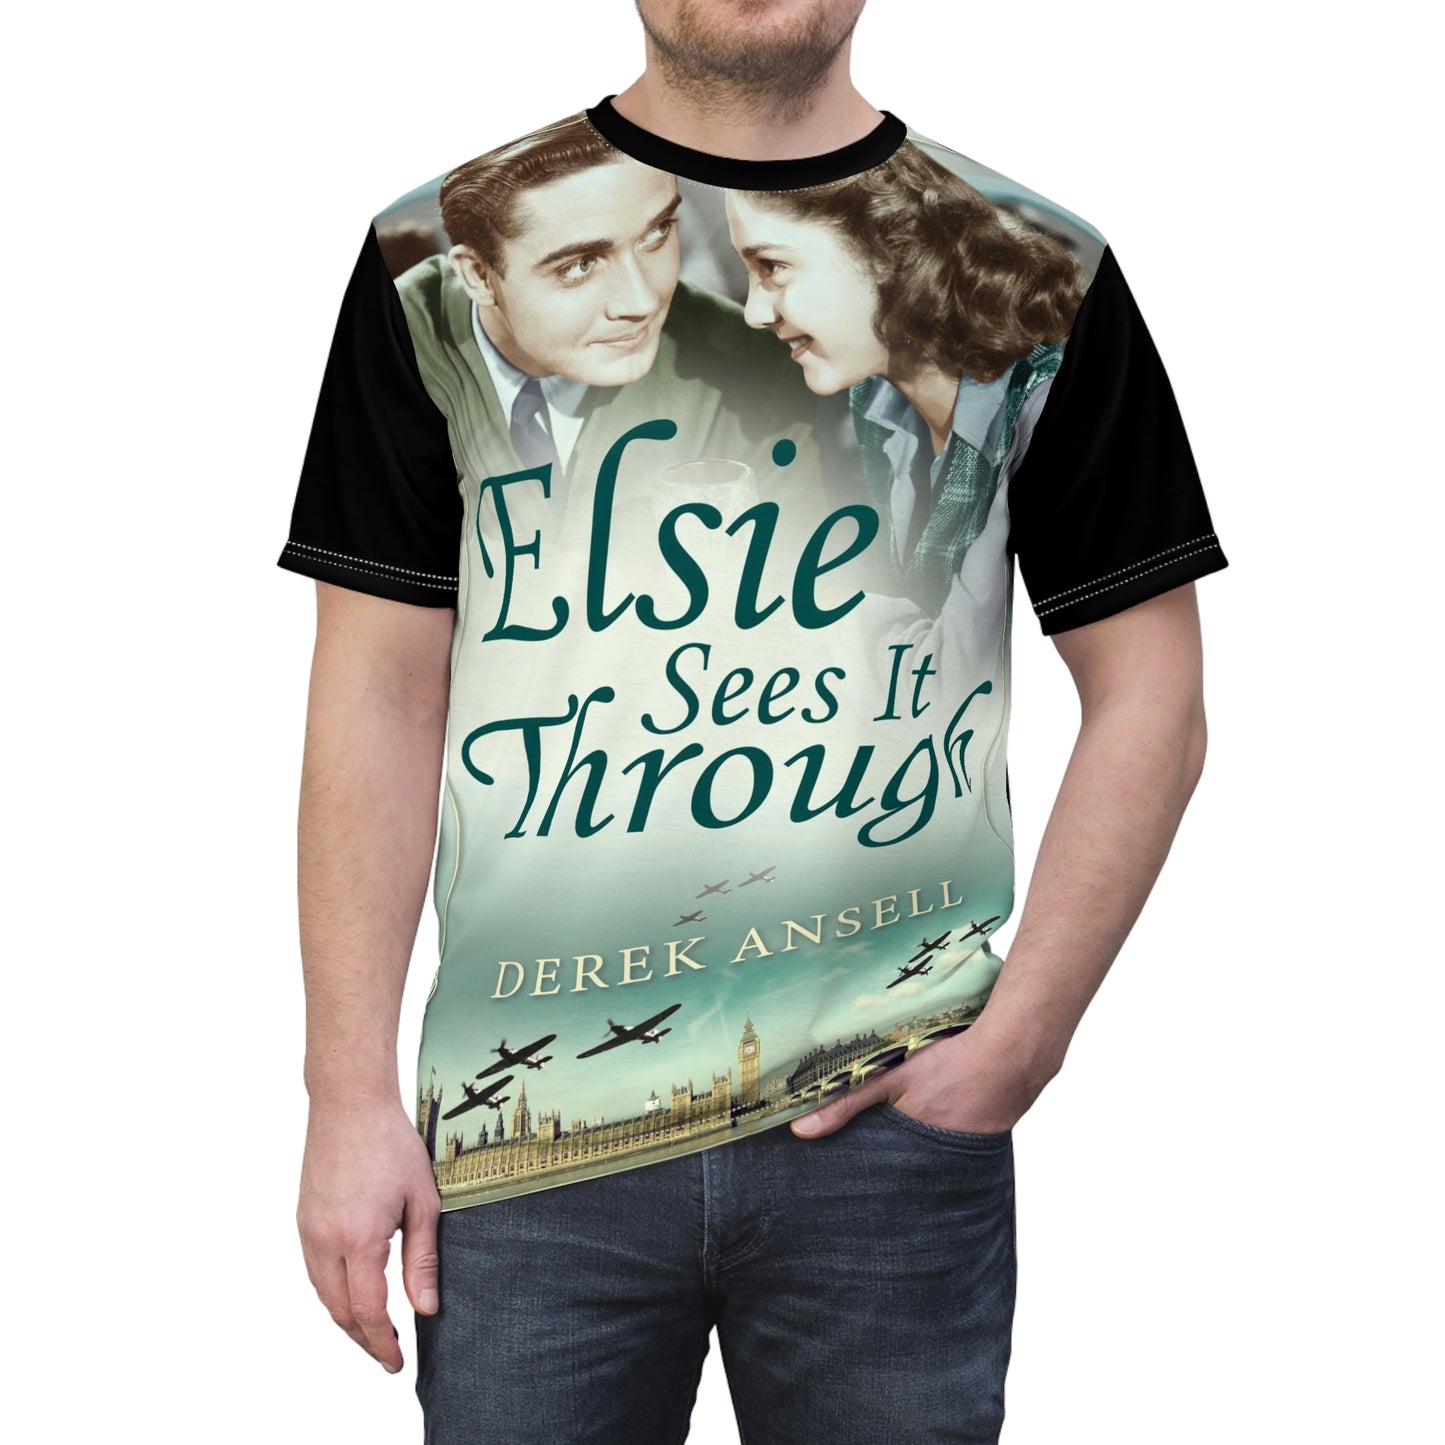 Elsie Sees It Through - Unisex All-Over Print Cut & Sew T-Shirt